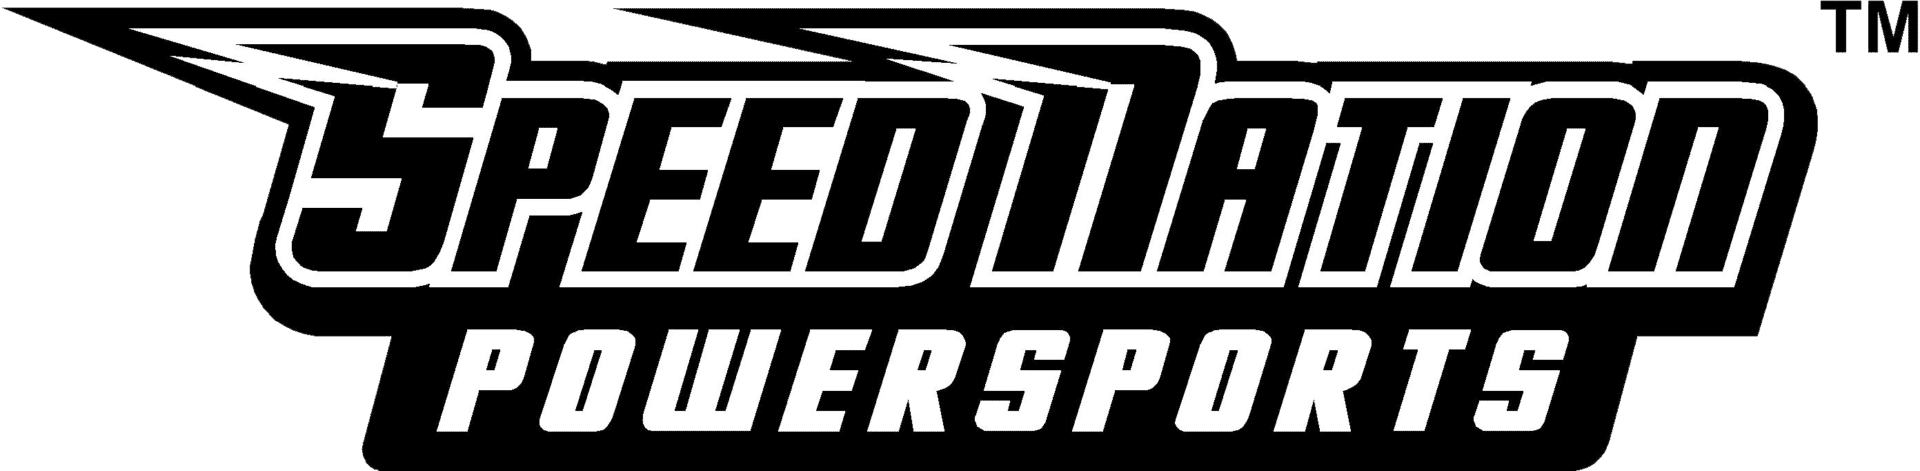 Speed Nation logo white